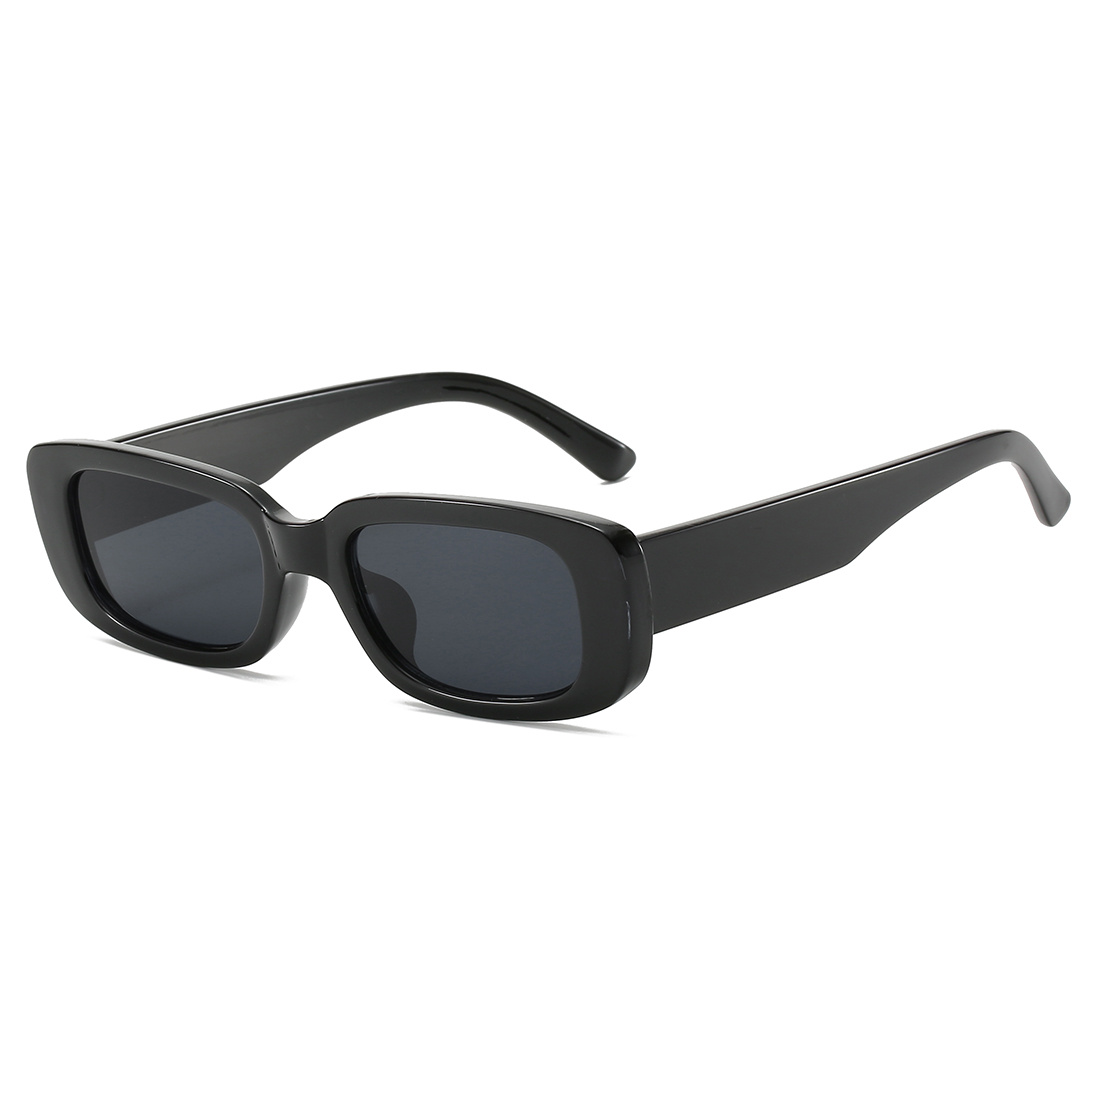 Grey marble frame sunglasses lady New square frame luxury brand glasses  Original green box - AliExpress